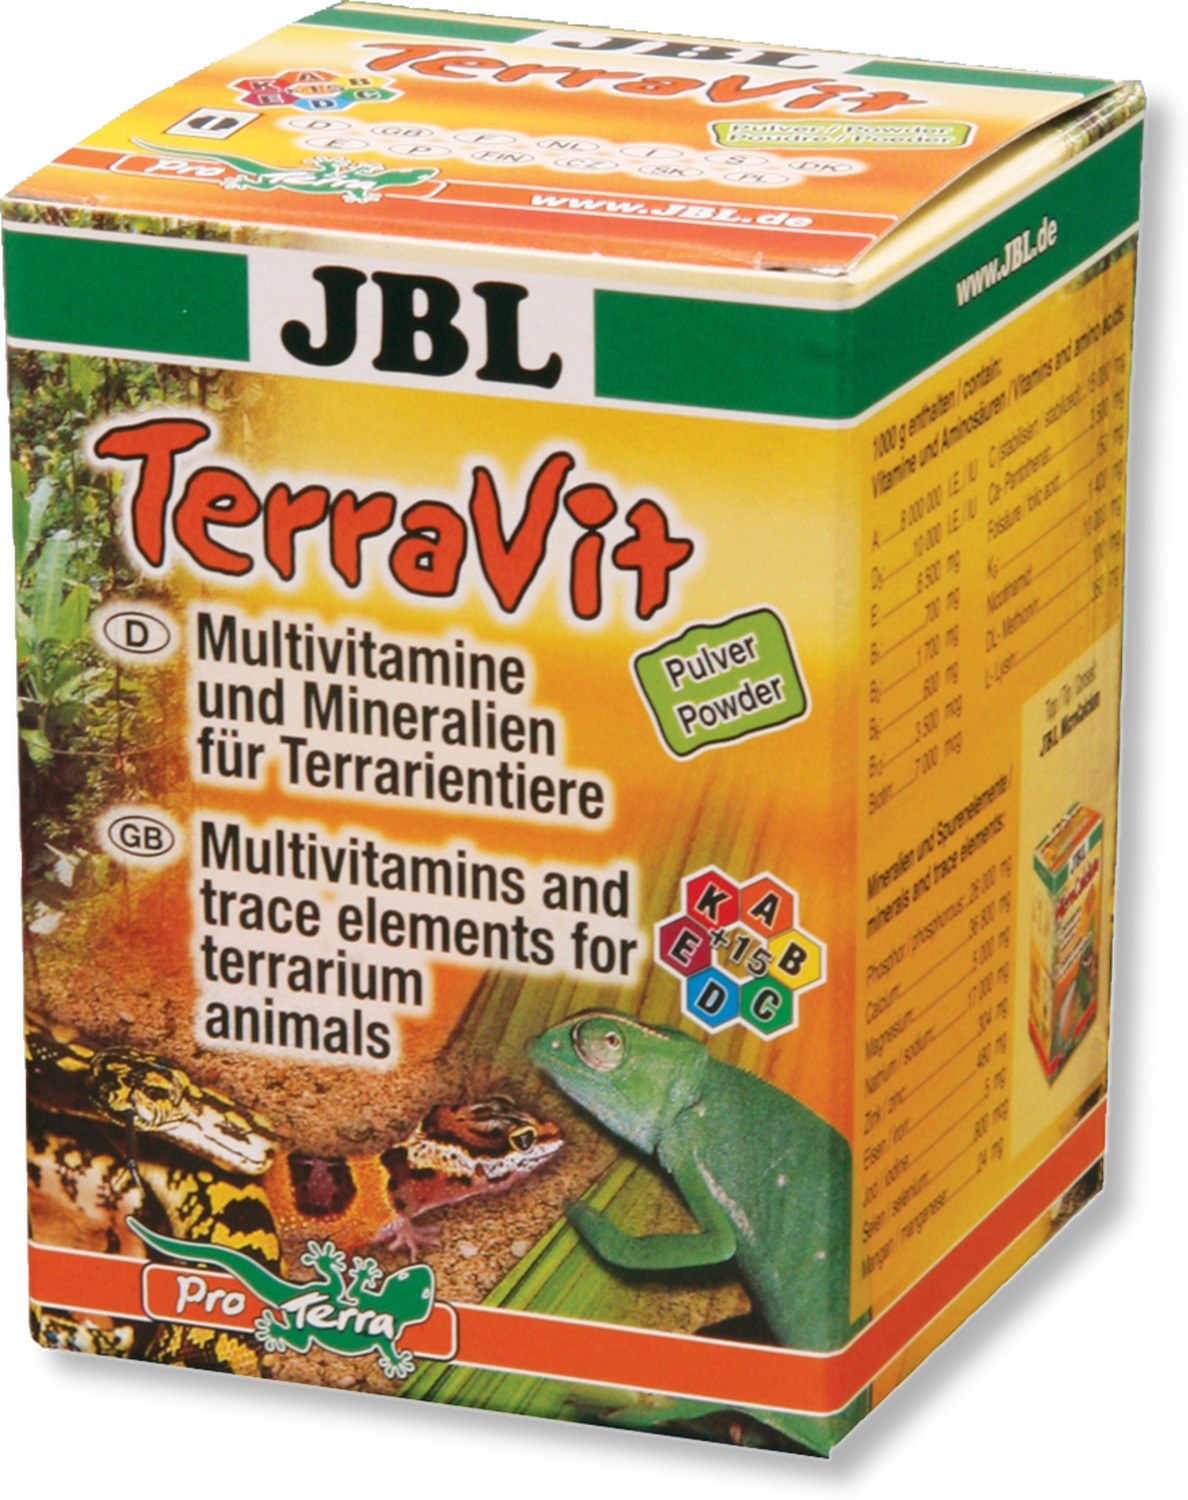 JBL TerraVit multivitamine pentru amfibieni și reptile - zoom